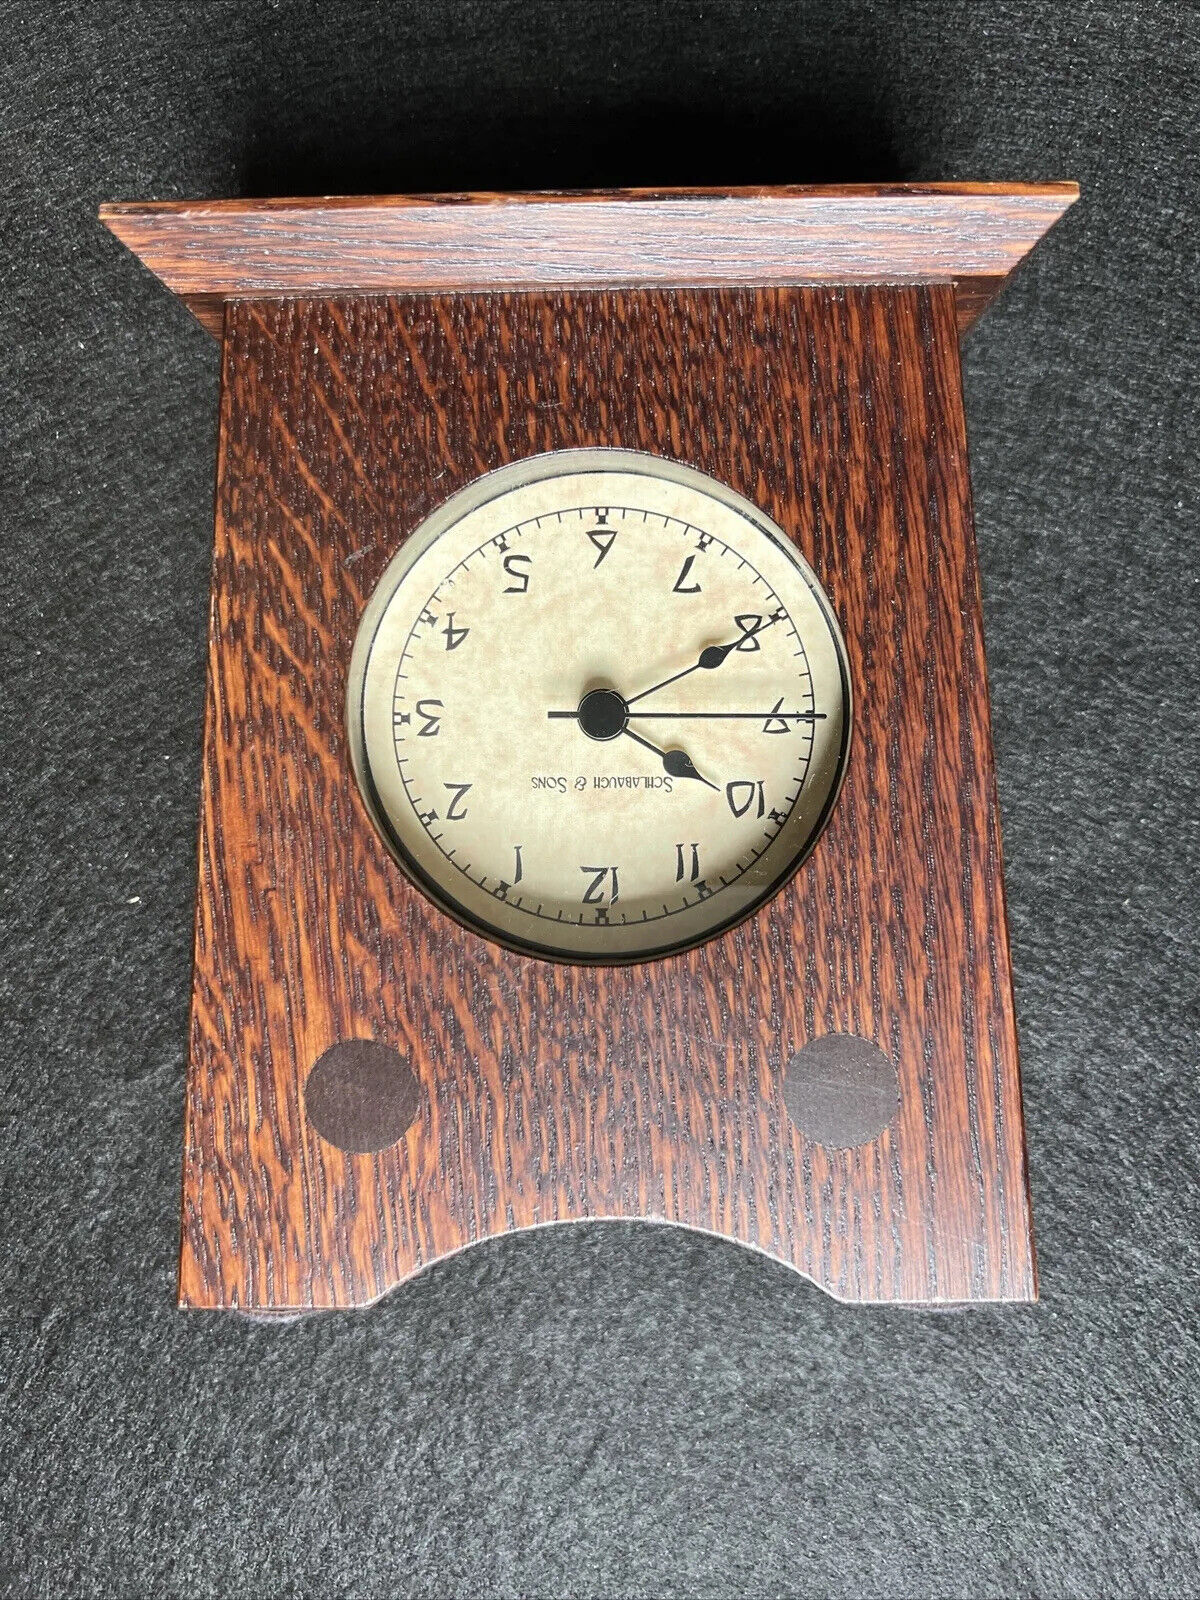 Schlabaugh & Sons Clock Art Sculpture Wood [Pre-Owned]